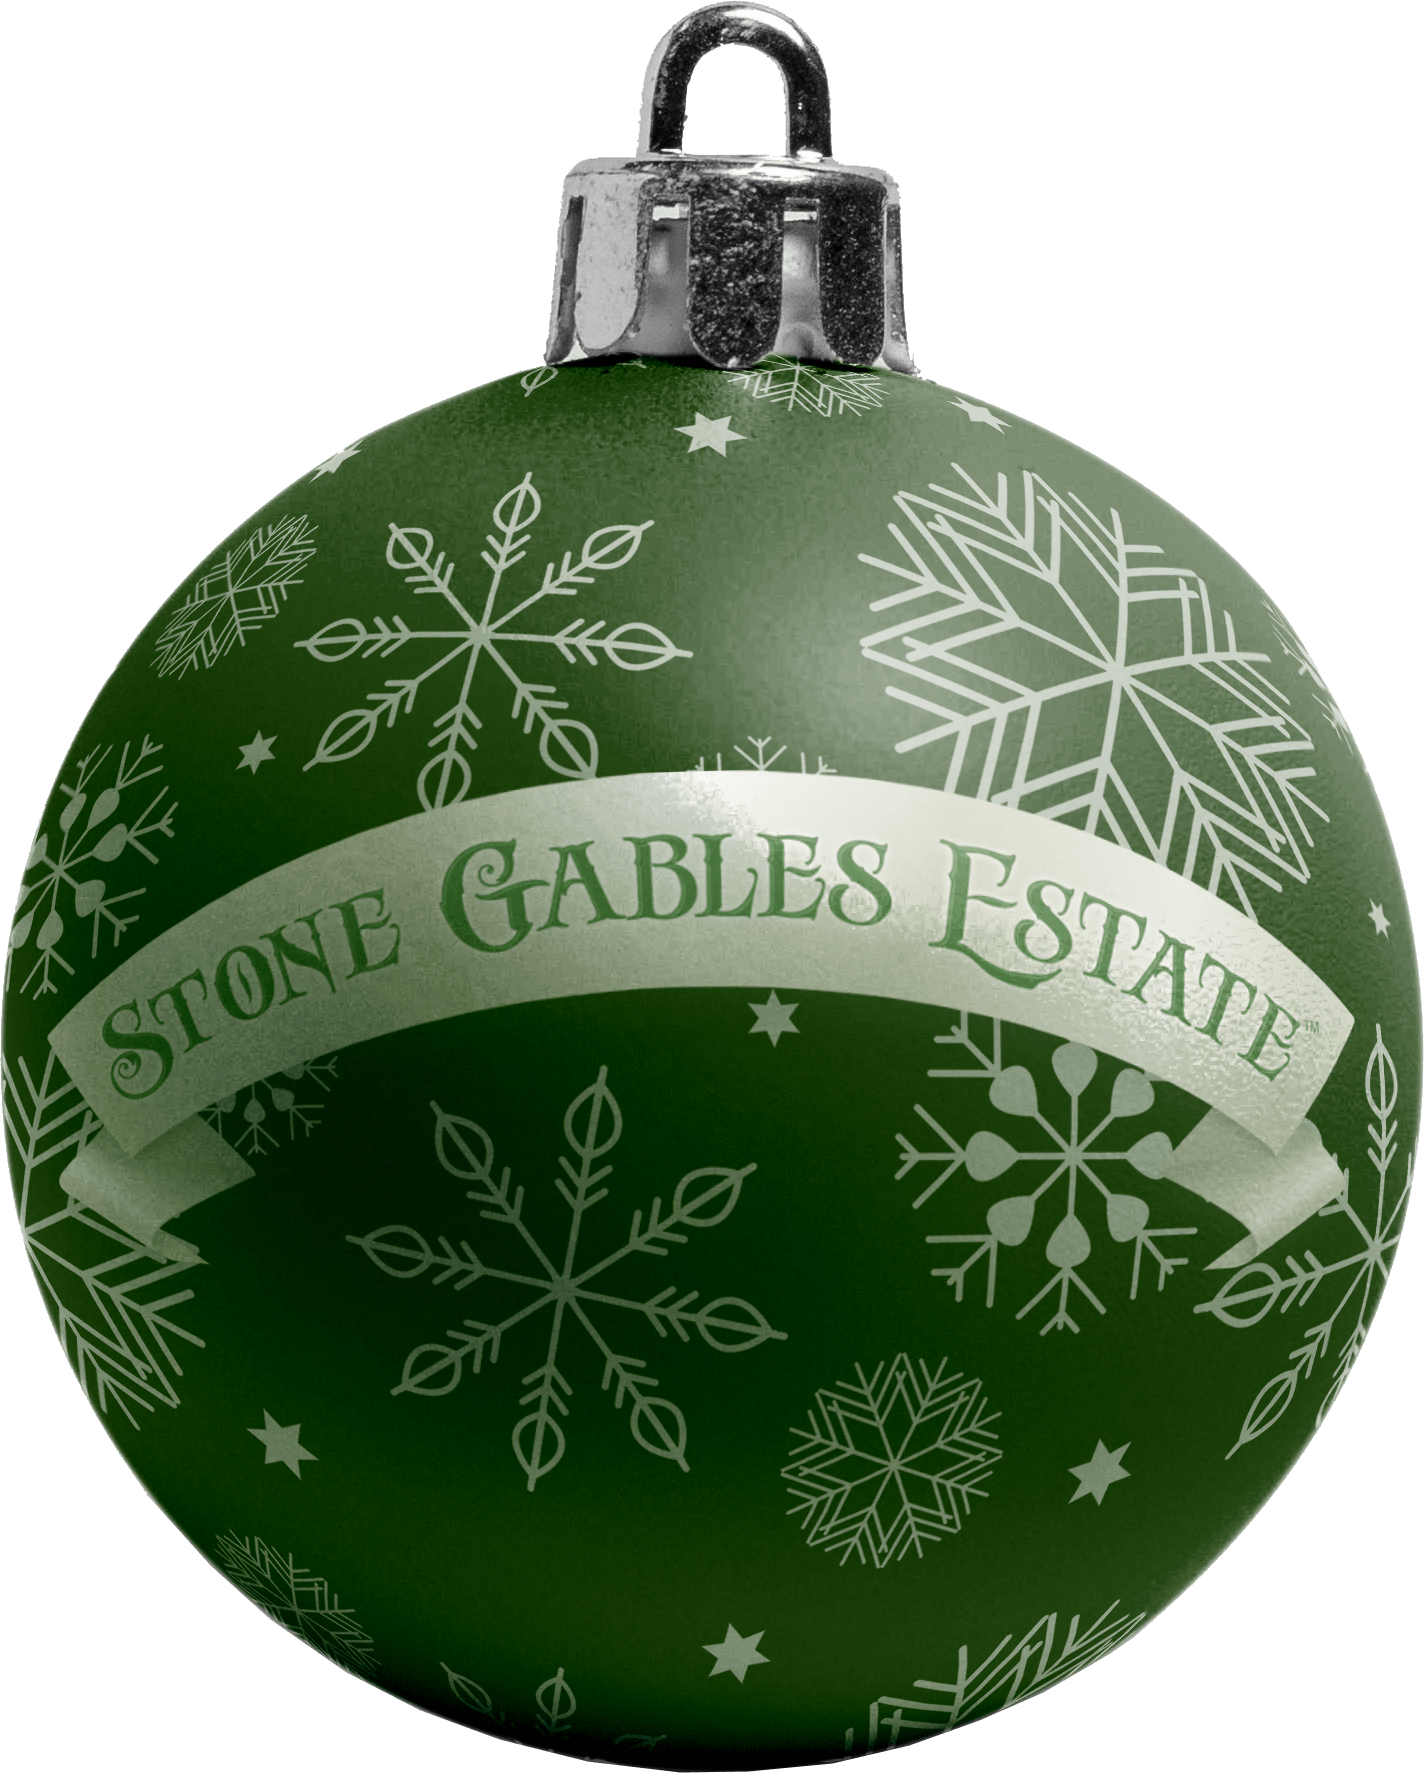 Christmas Ornament - Stone Gables Estate